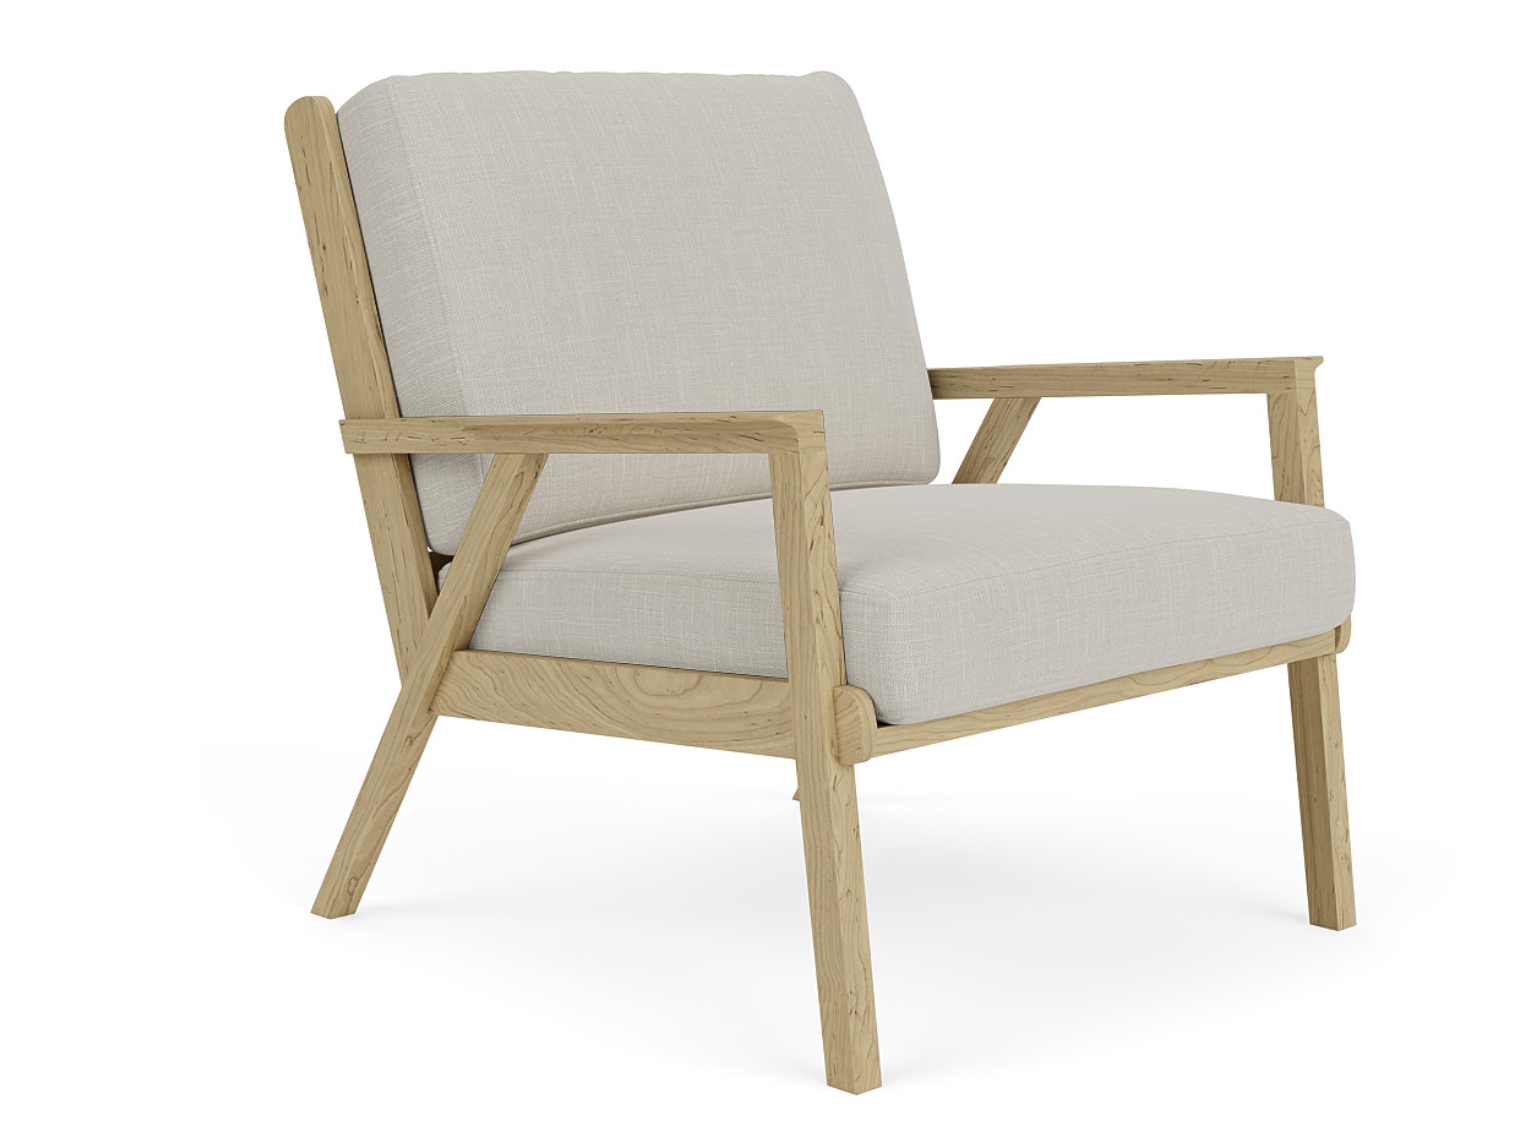 x2 Ridge Accent Chairs (New)